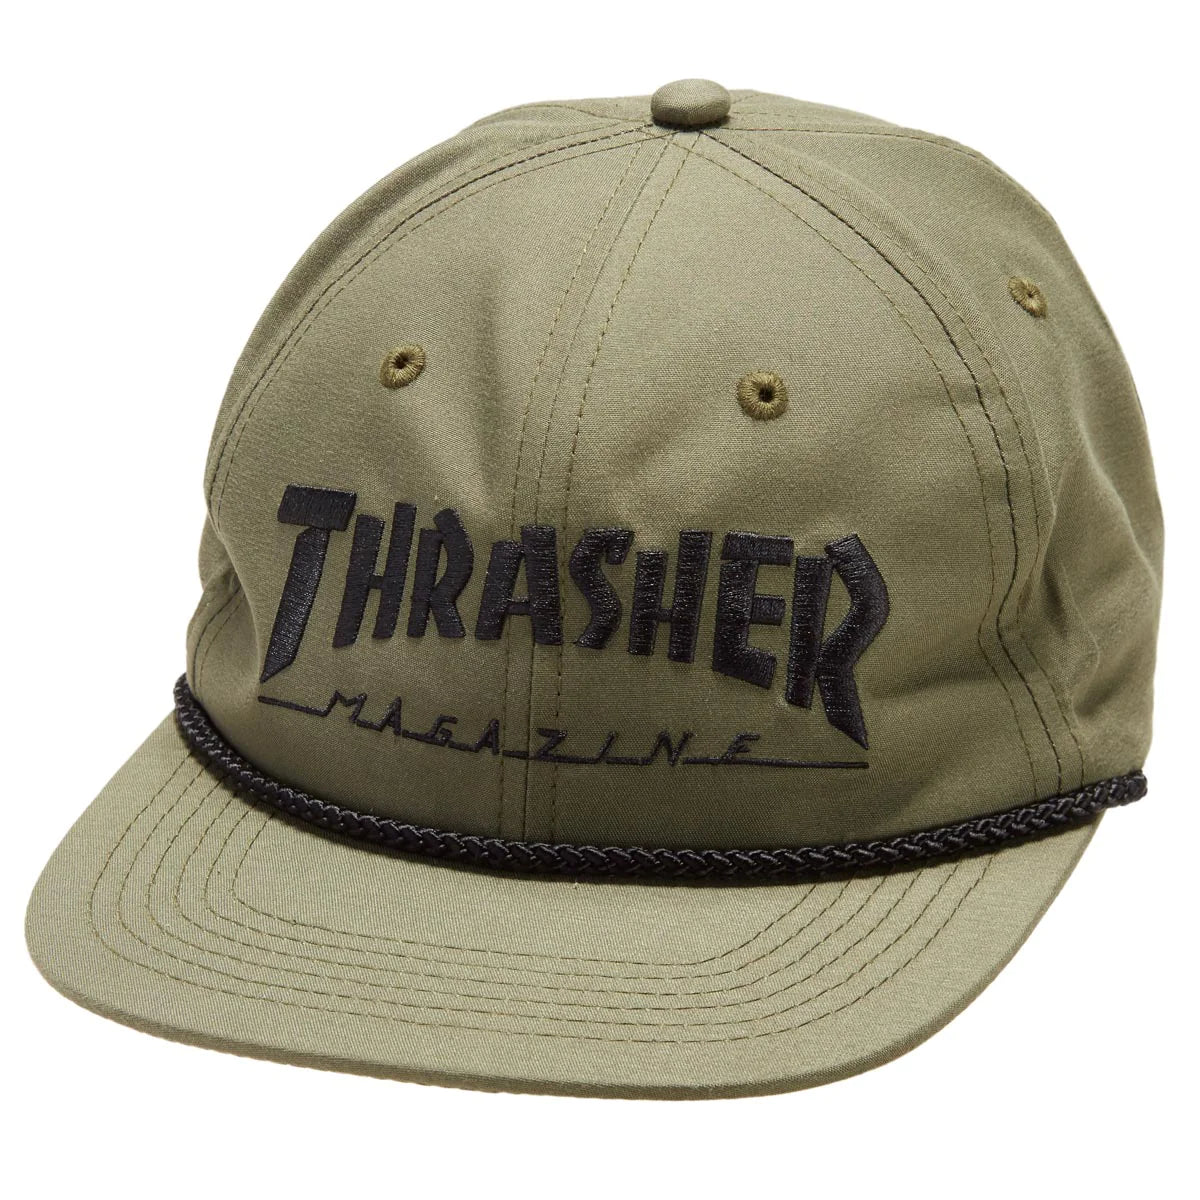 Thrasher SnapBack Rope Hat